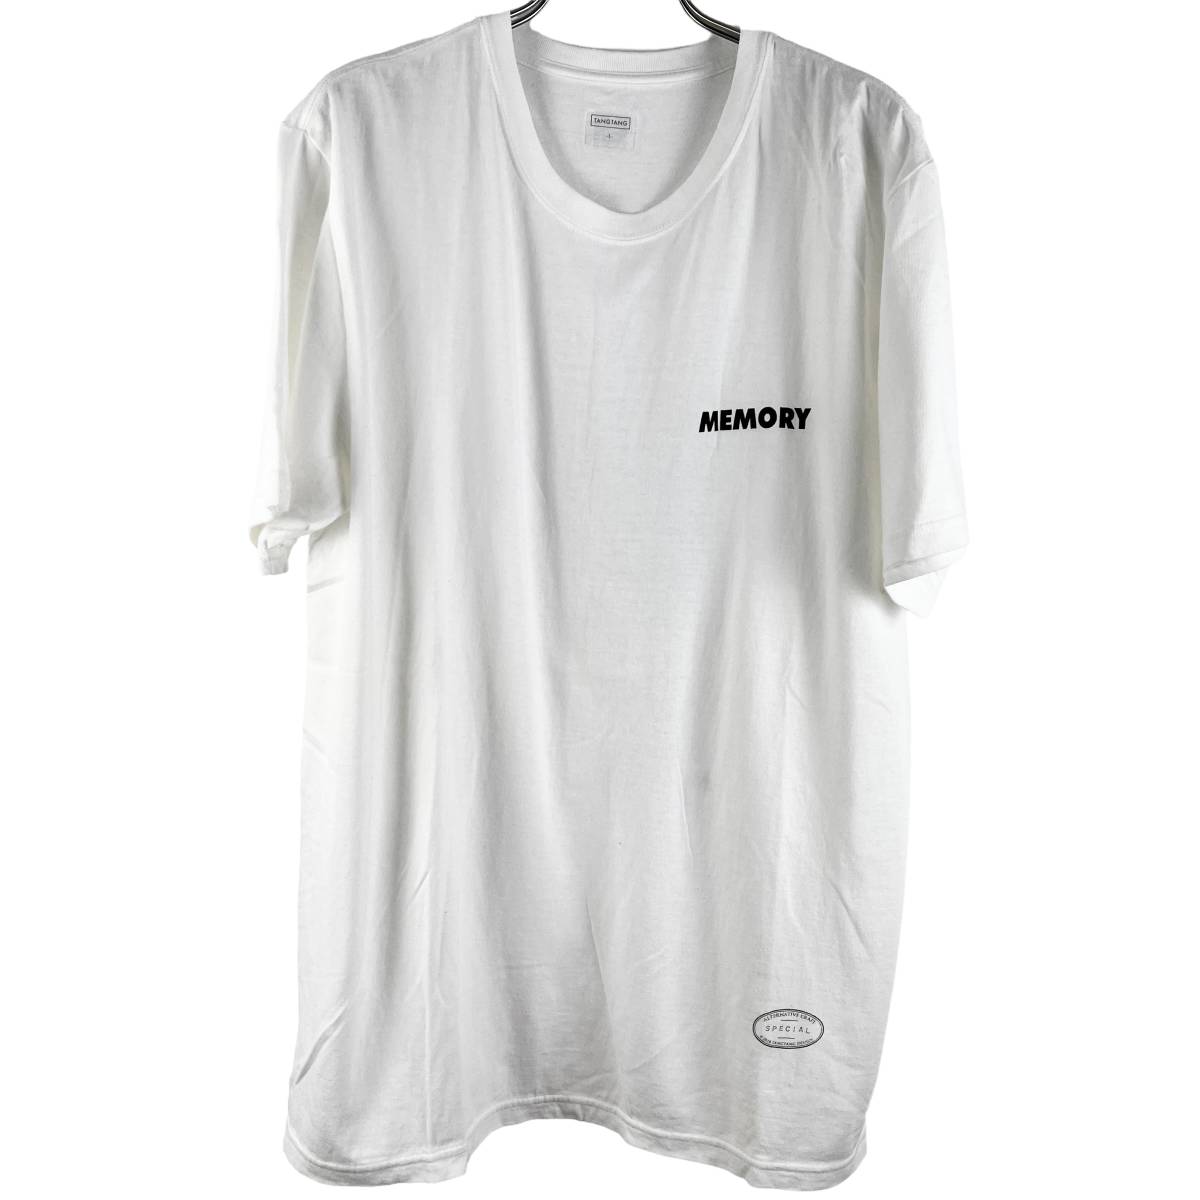 TANGTANG DESIGN(タンタンデザイン) MEMORY Print Shortsleeve T Shirt (white)